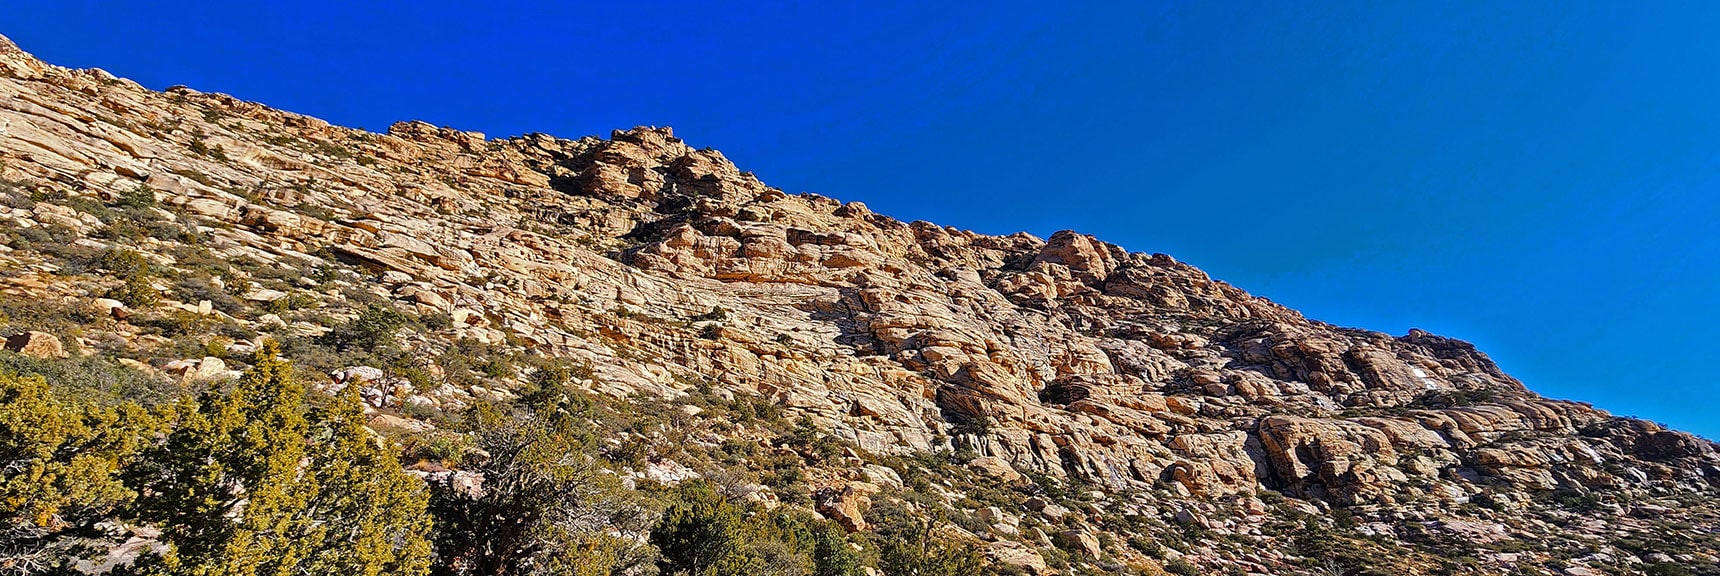 Rounding Western White Rock Mountain, Now in Red Rock Canyon NCA | White Rock Mountain Loop Trail | Red Rock Canyon, Nevada